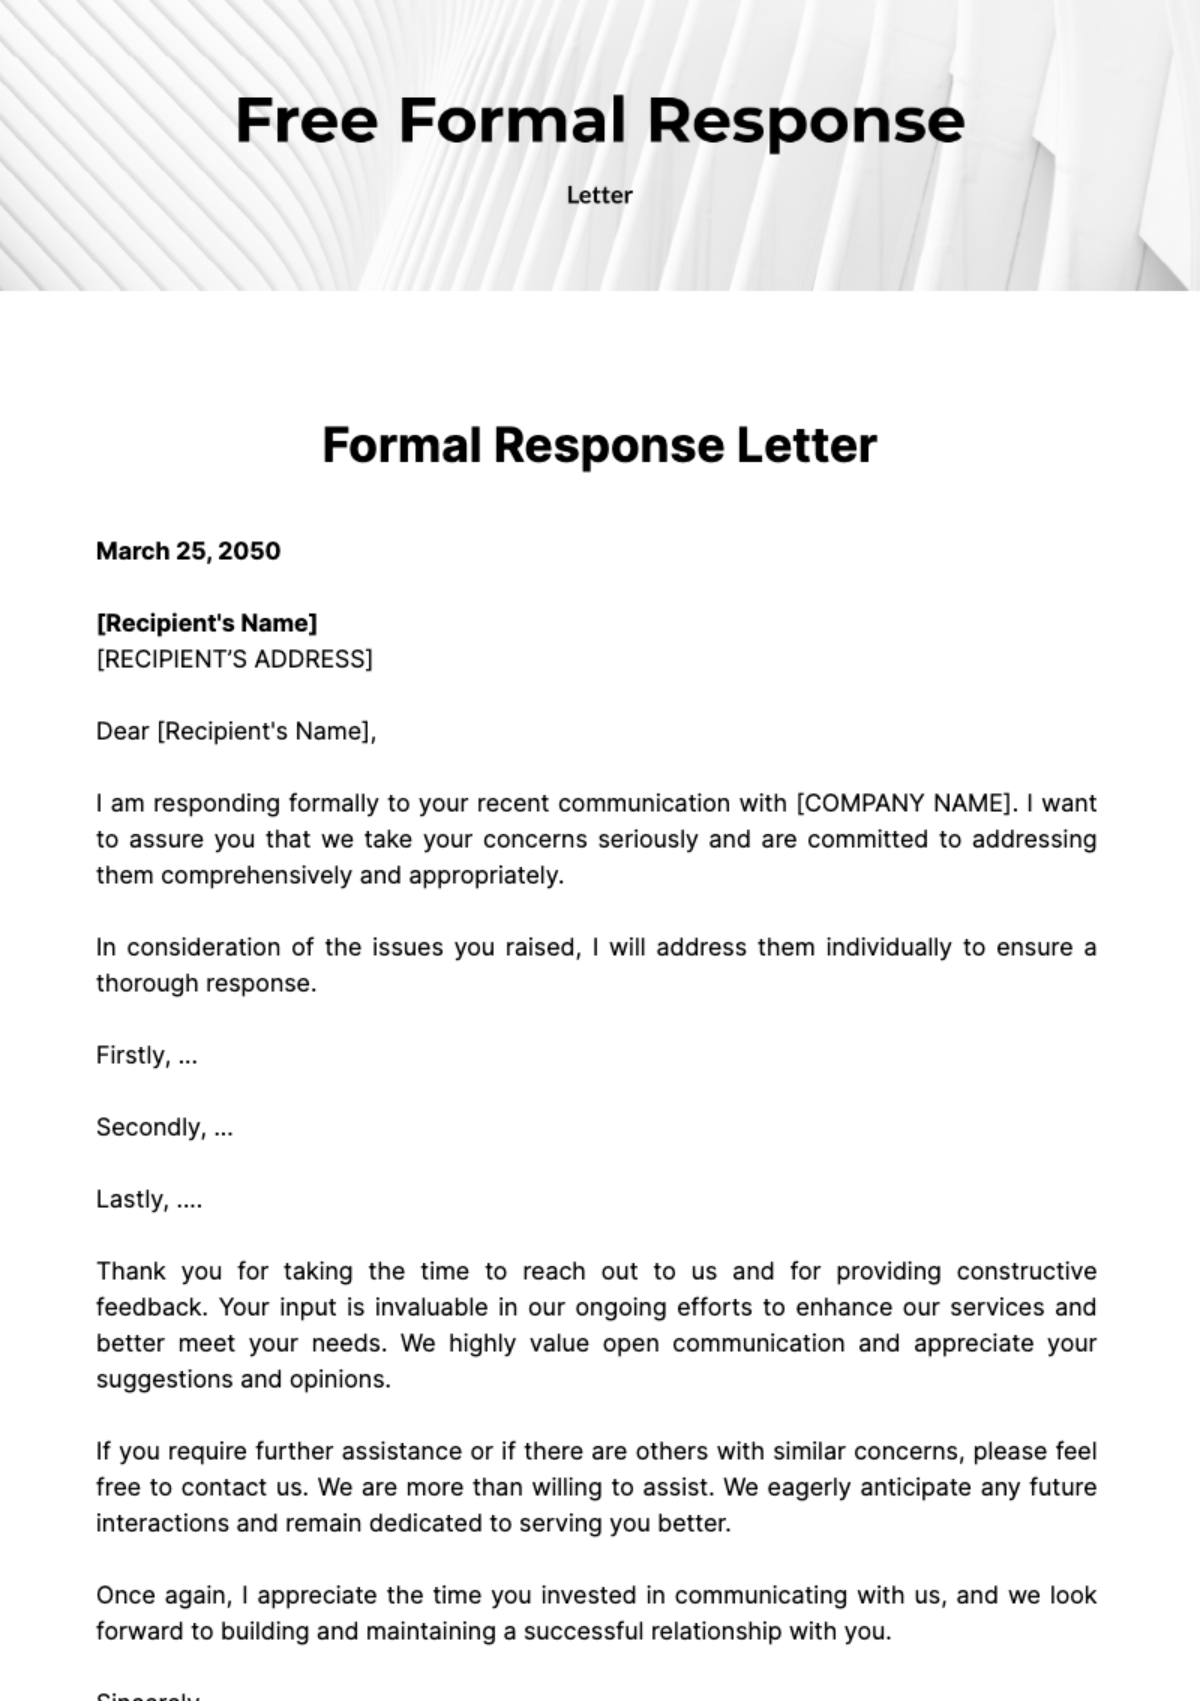 Formal Response Letter Template